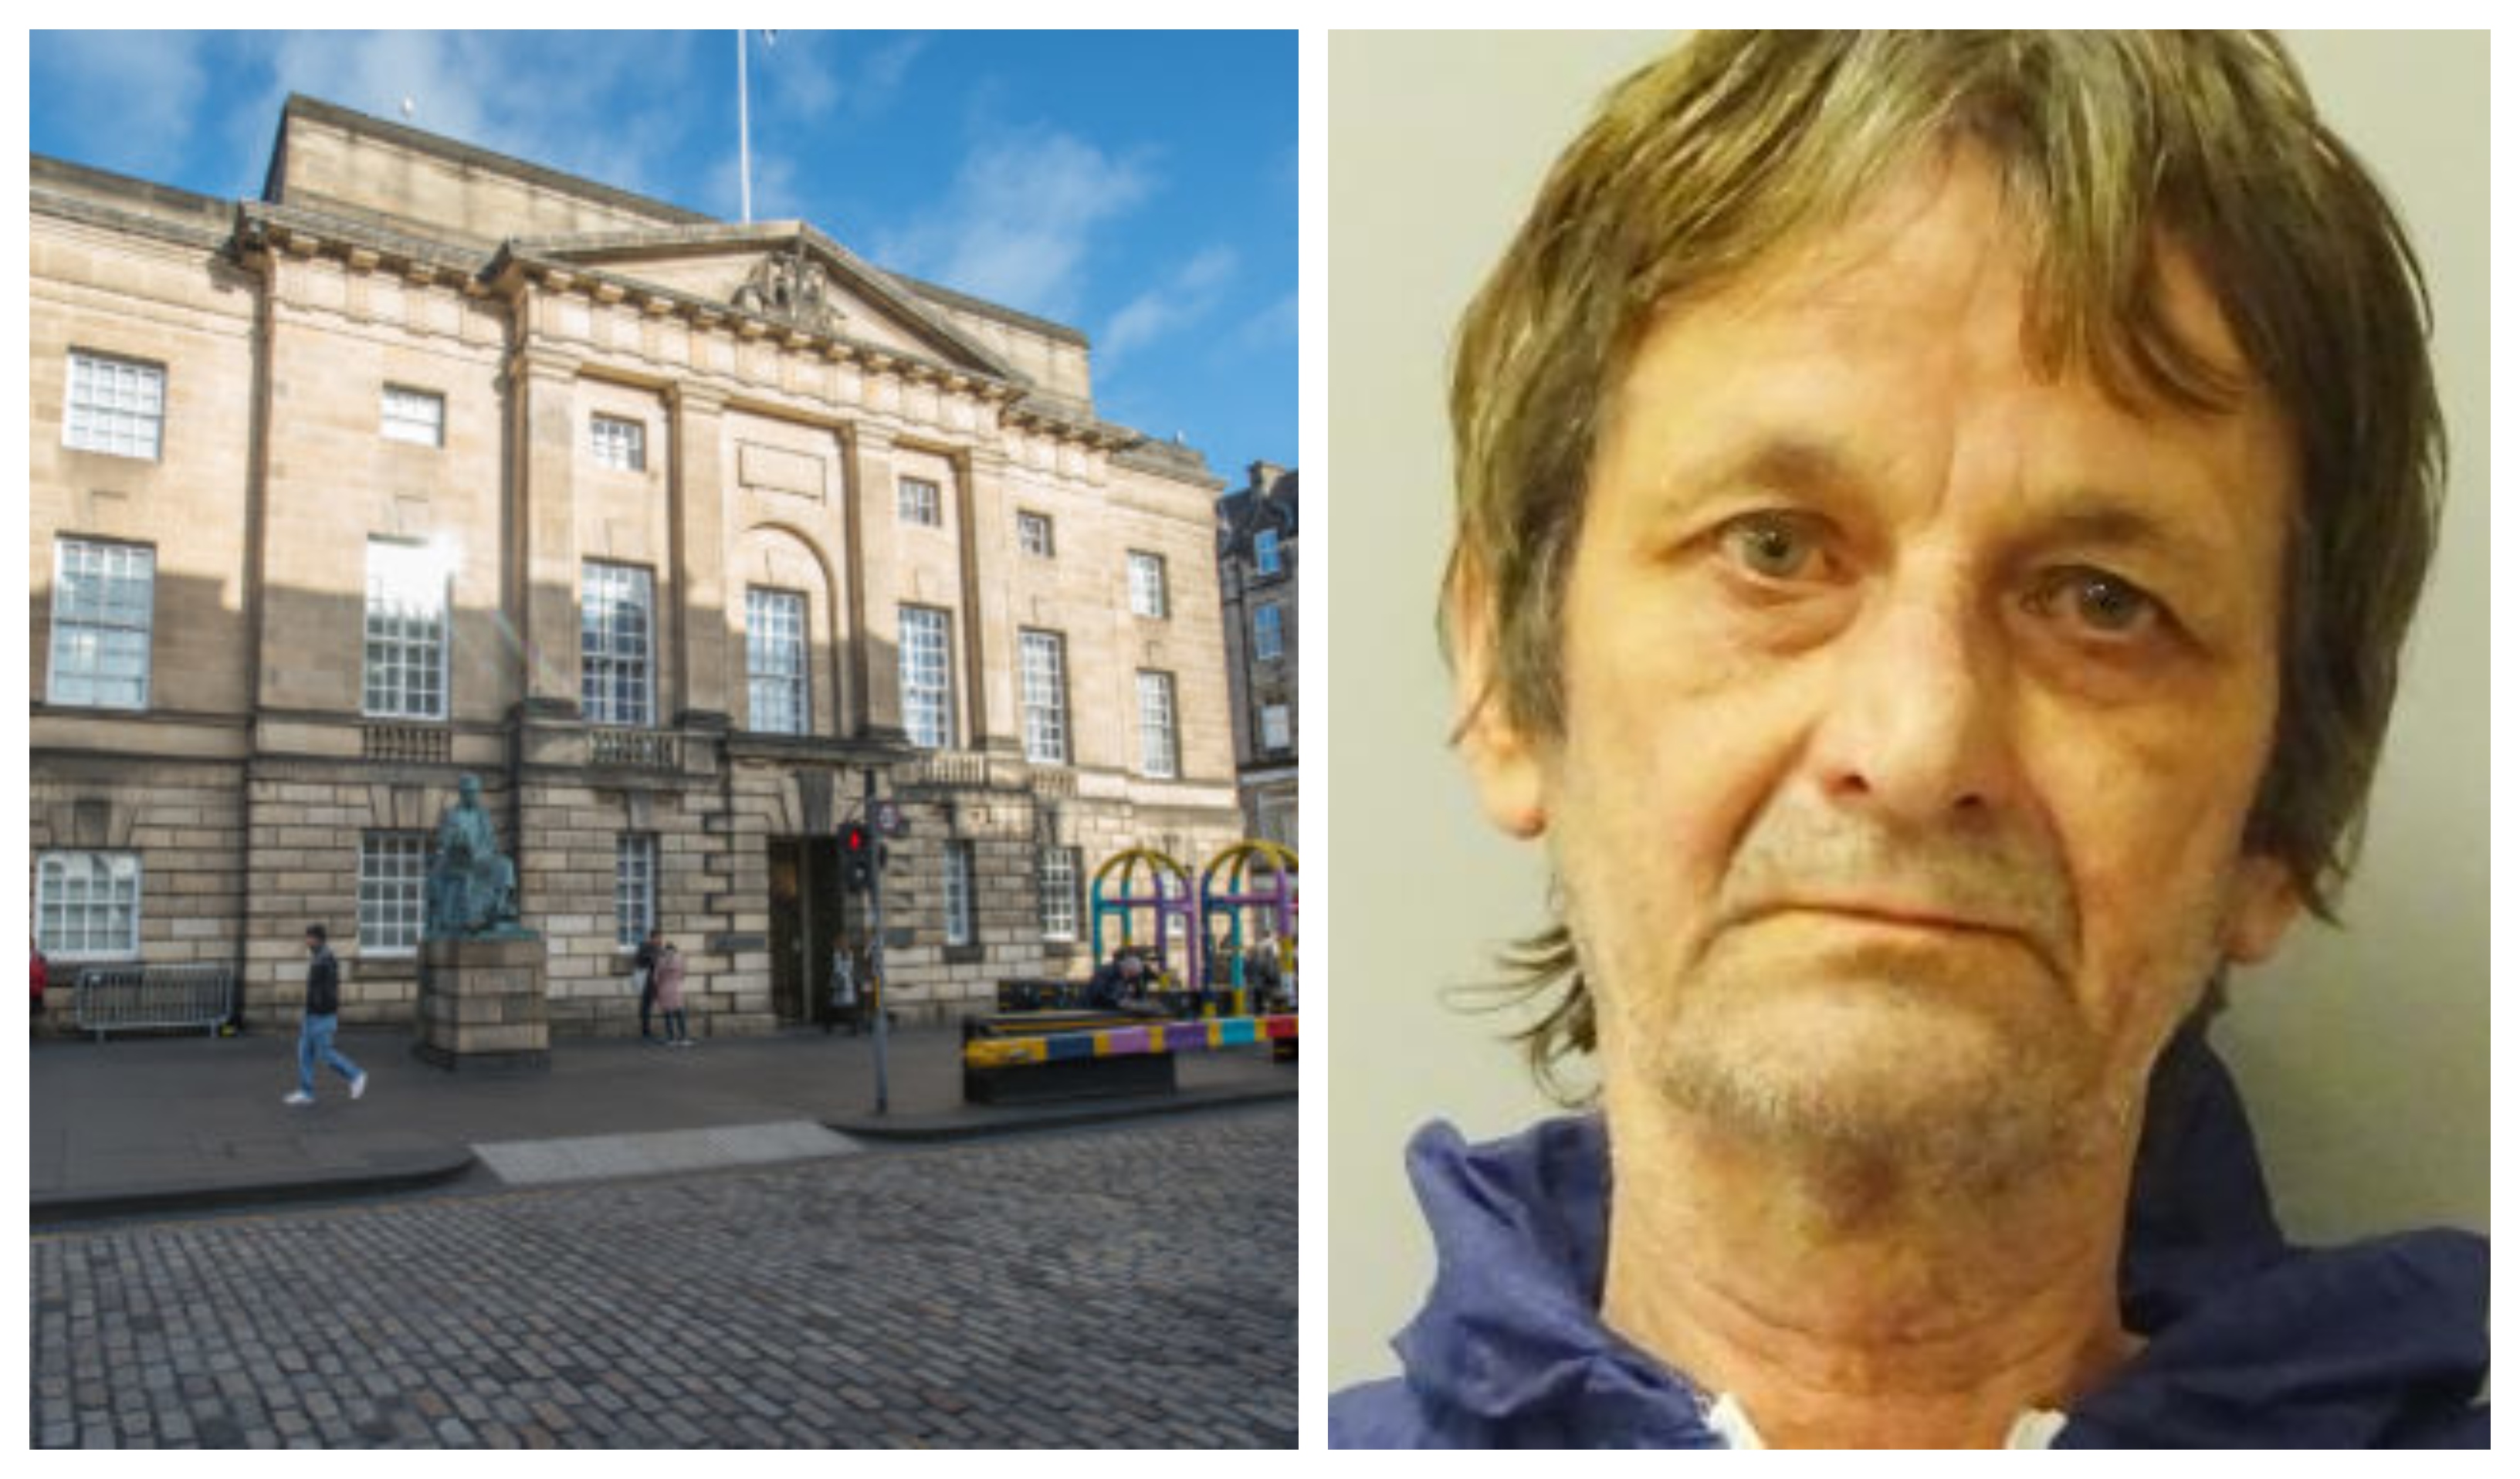 Bohdan Cieslar was sentenced at the High Court in Edinburgh